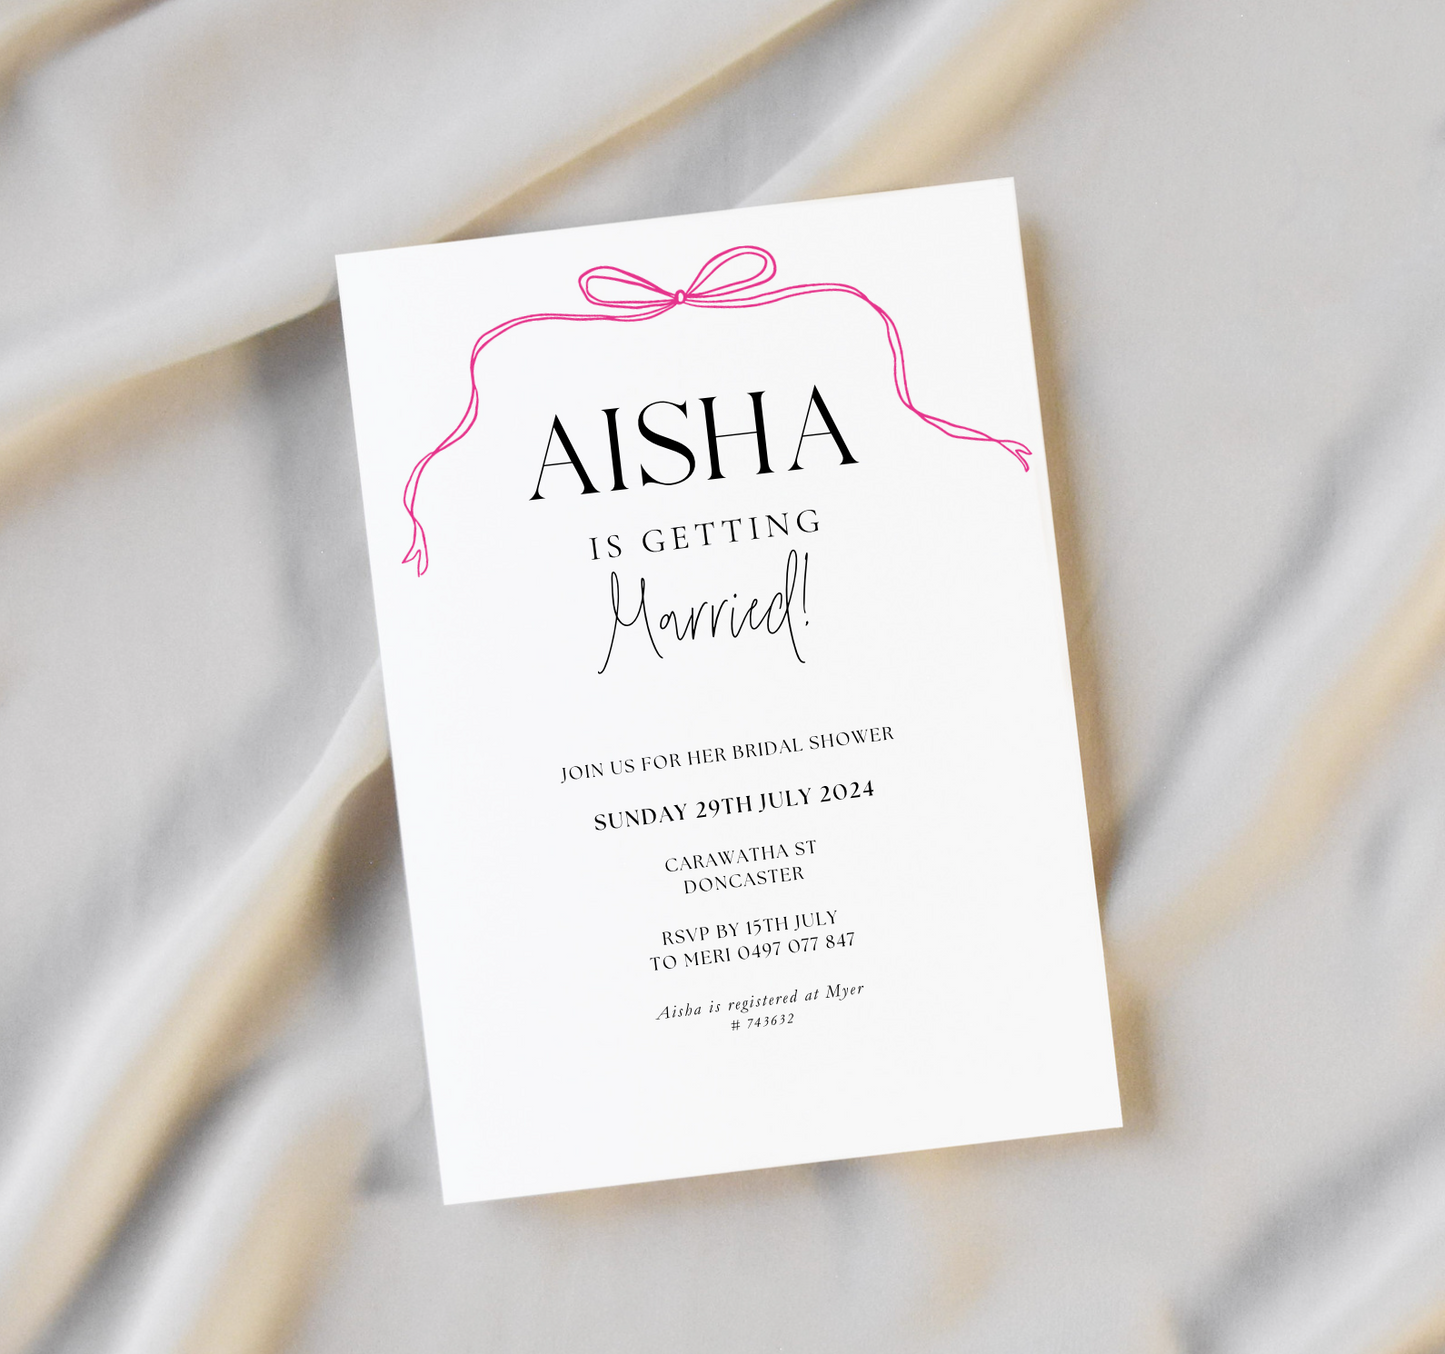 'Aisha' Bridal Shower Invitation